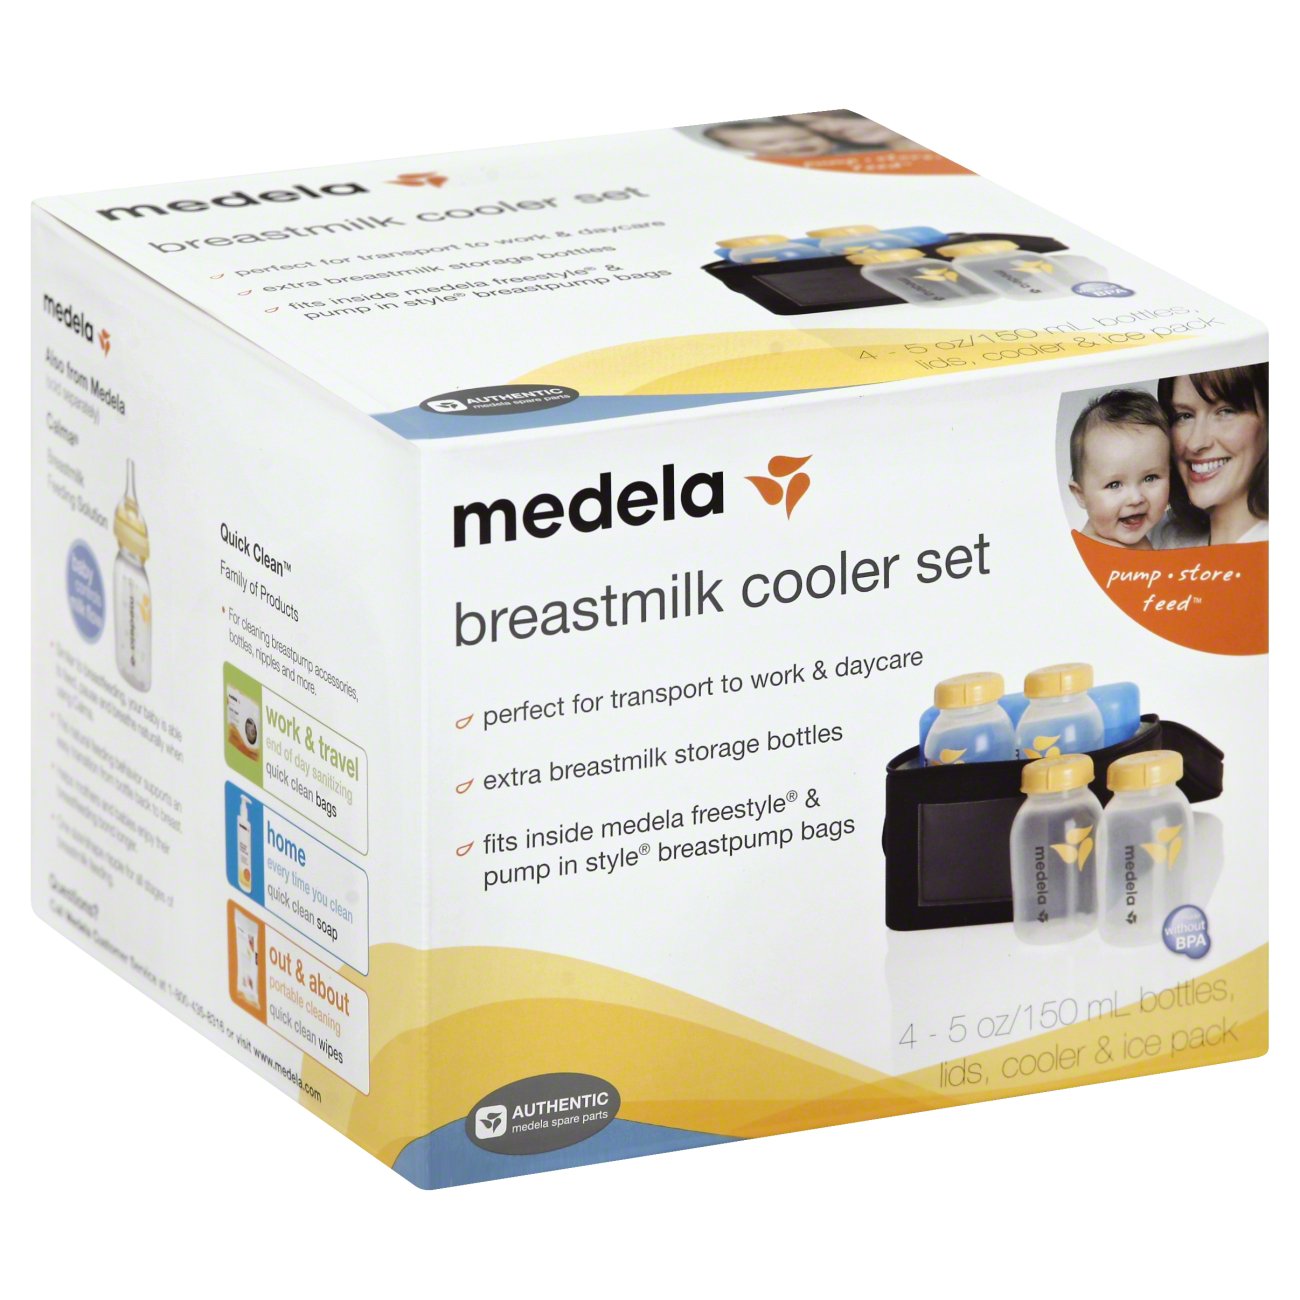 Medela Breastmilk Cooler Set - Shop Breast Feeding Accessories at H-E-B